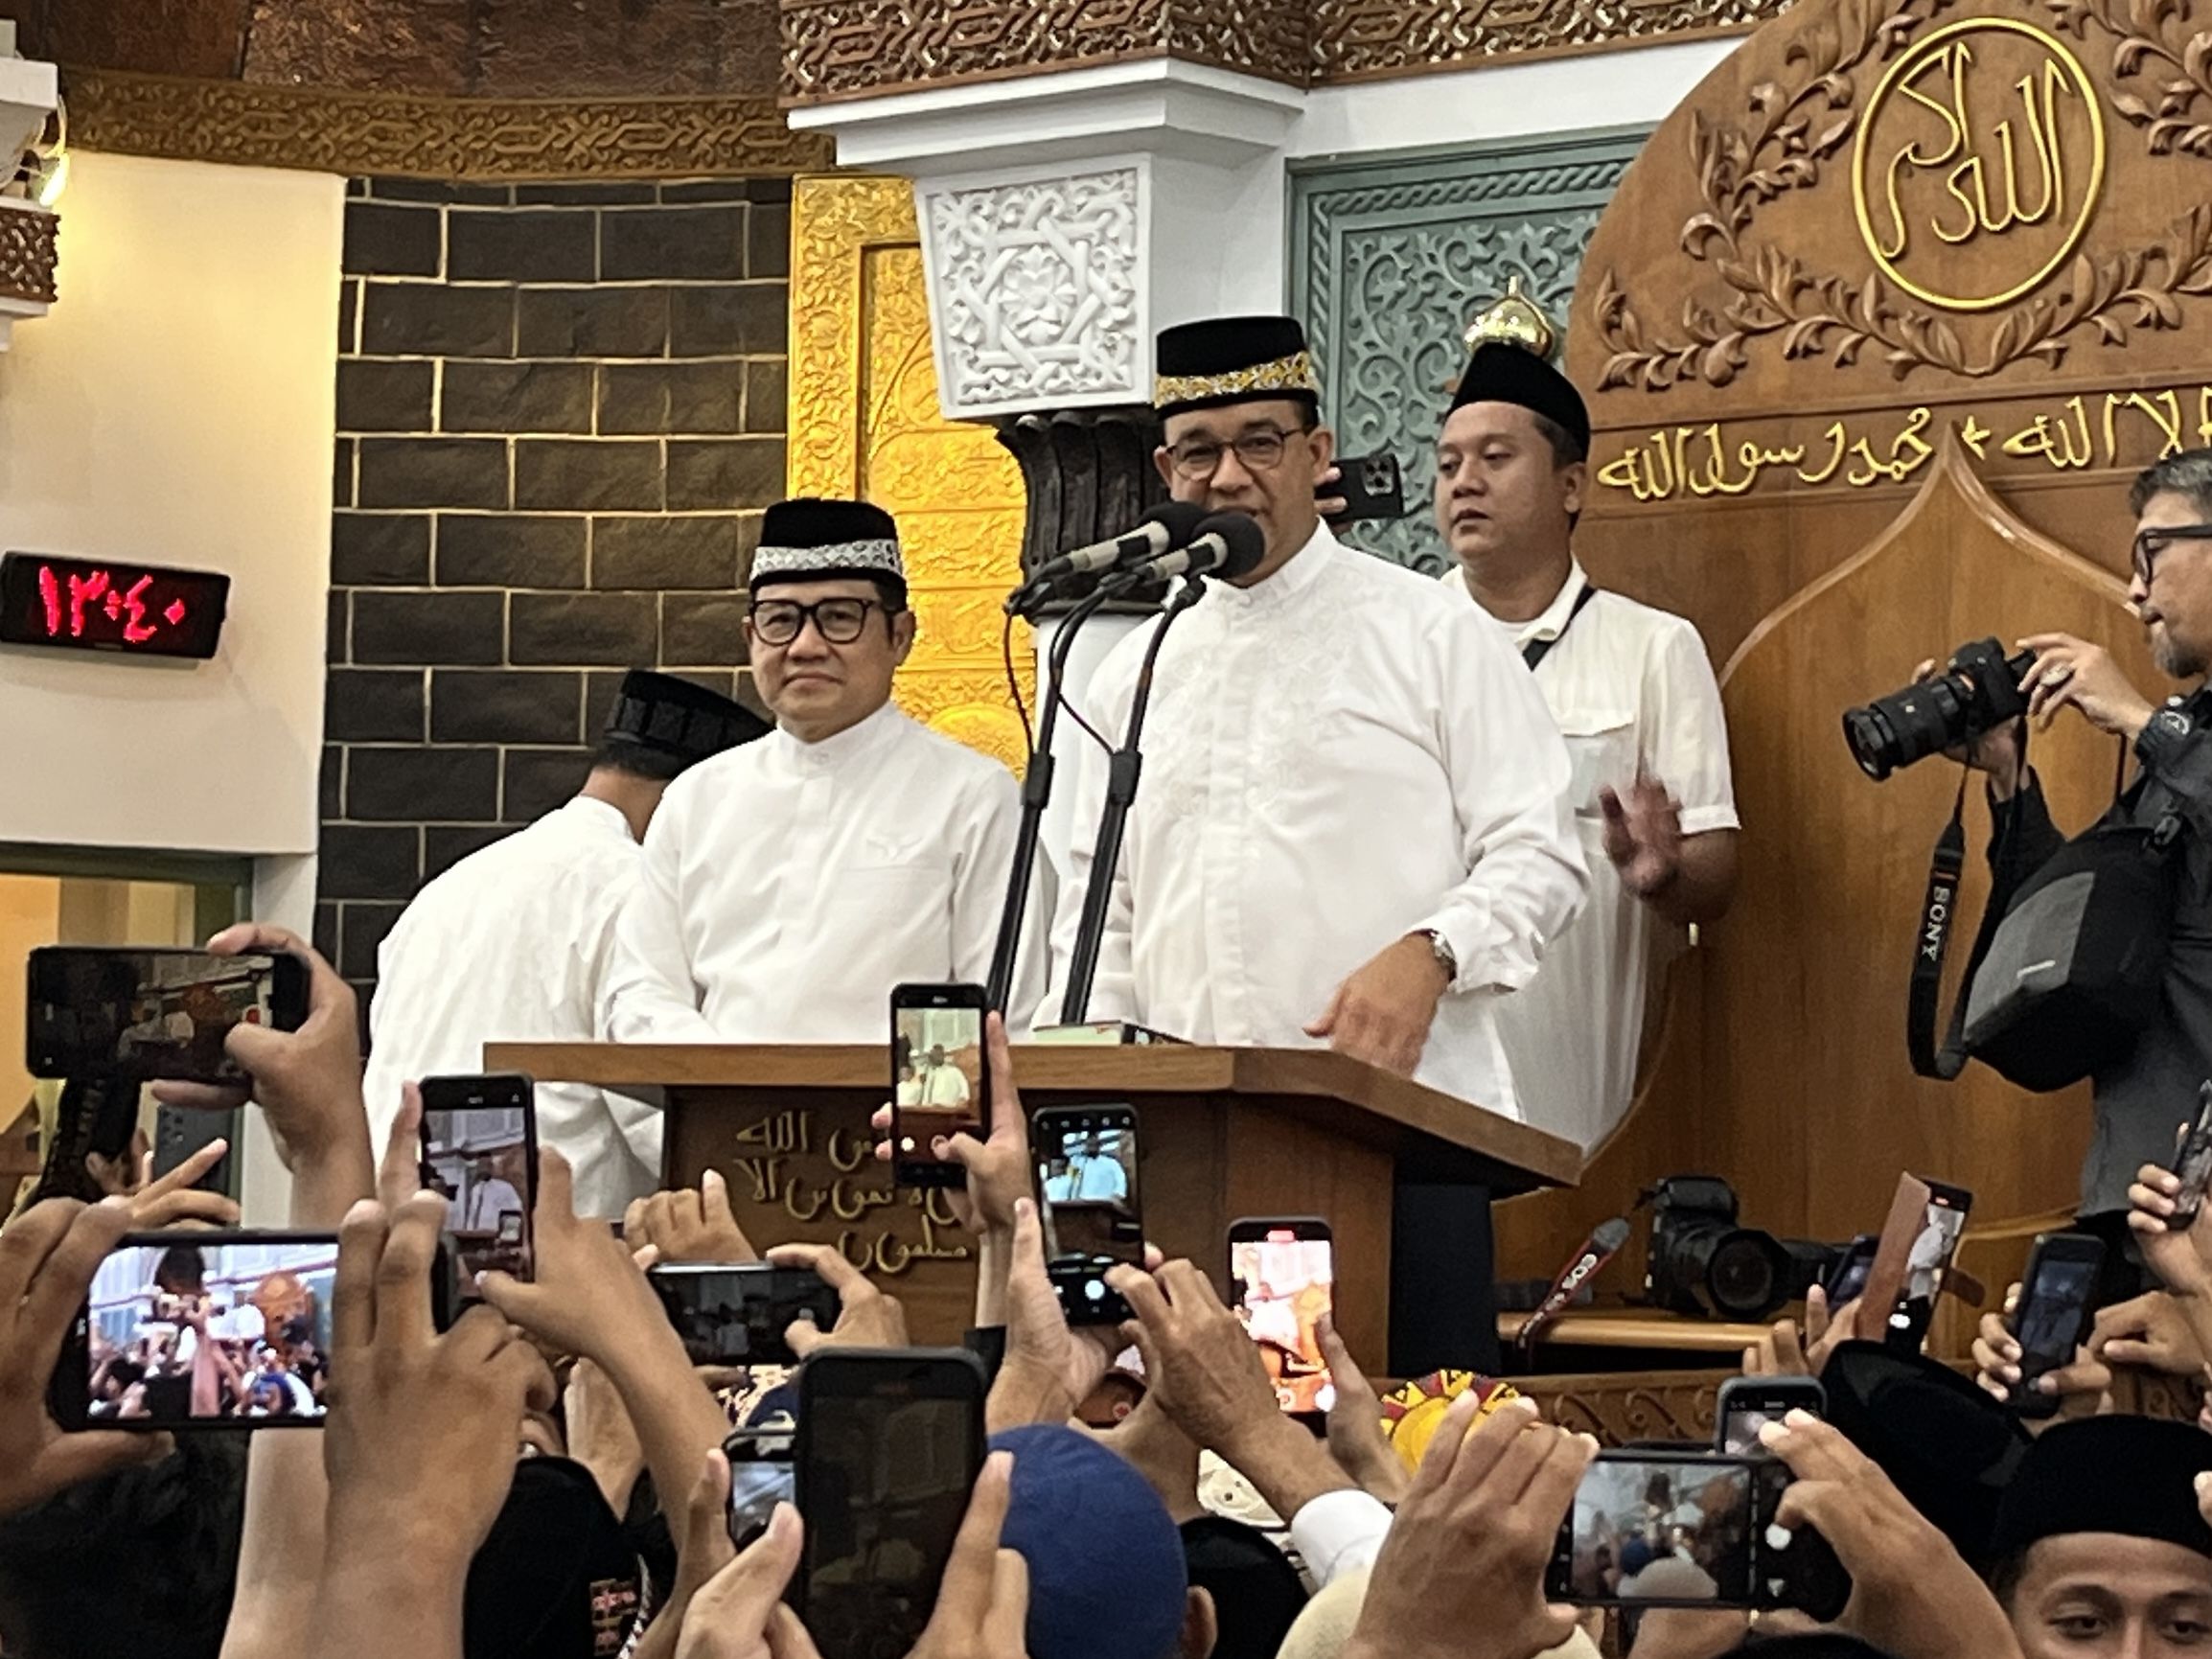 Dipilih 75 Persen Warga Aceh, Anies: Terima Kasih, Para Pemberani